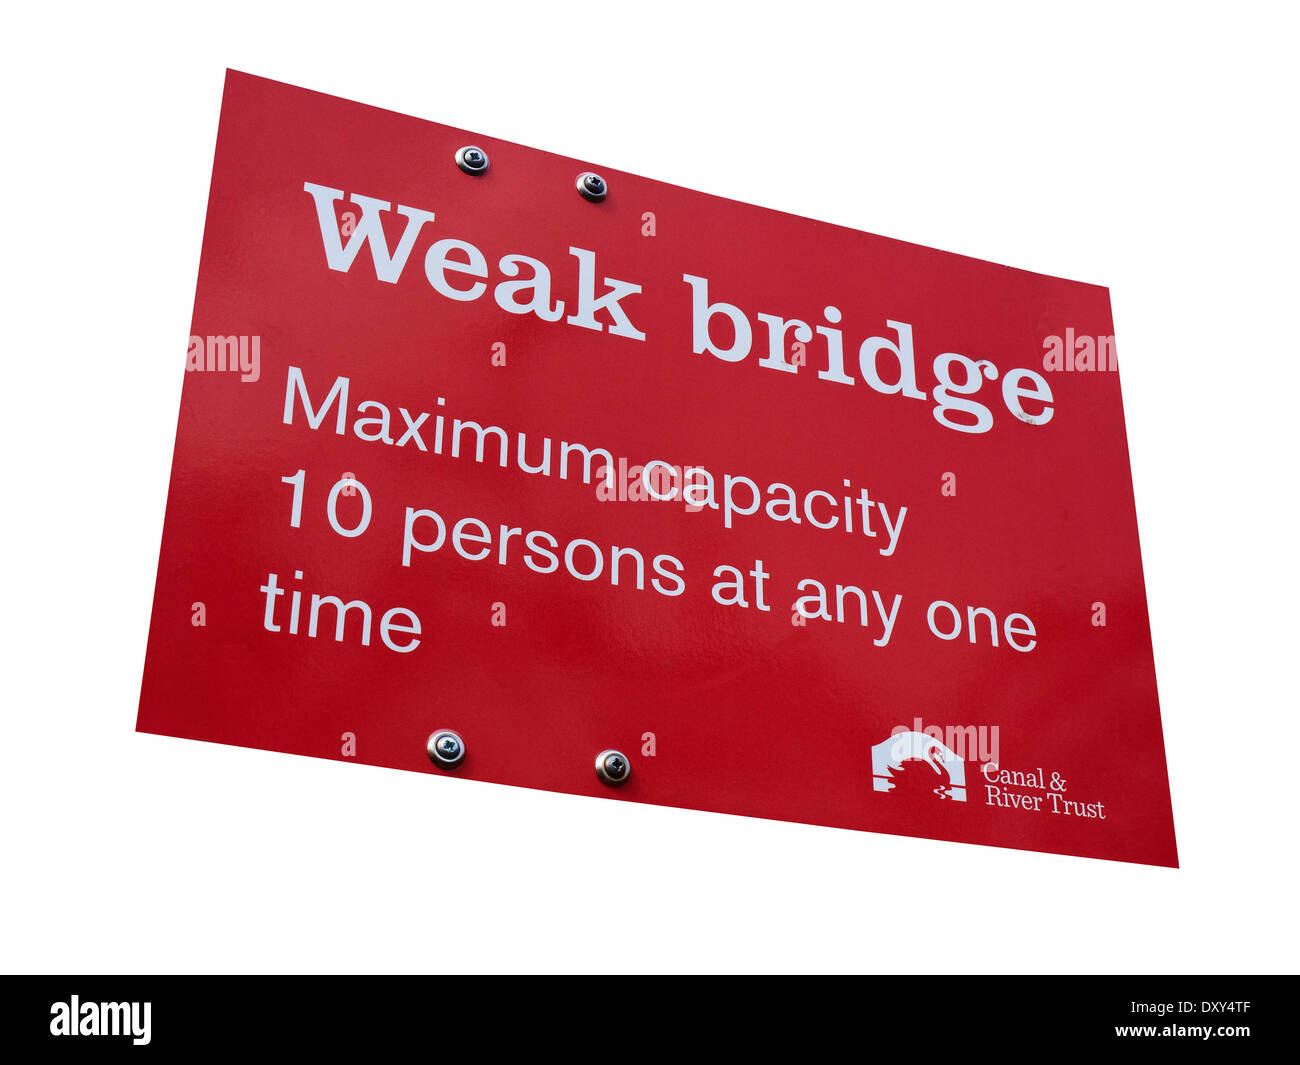 Weak bridge sign in Cheshire UK Stock Photo